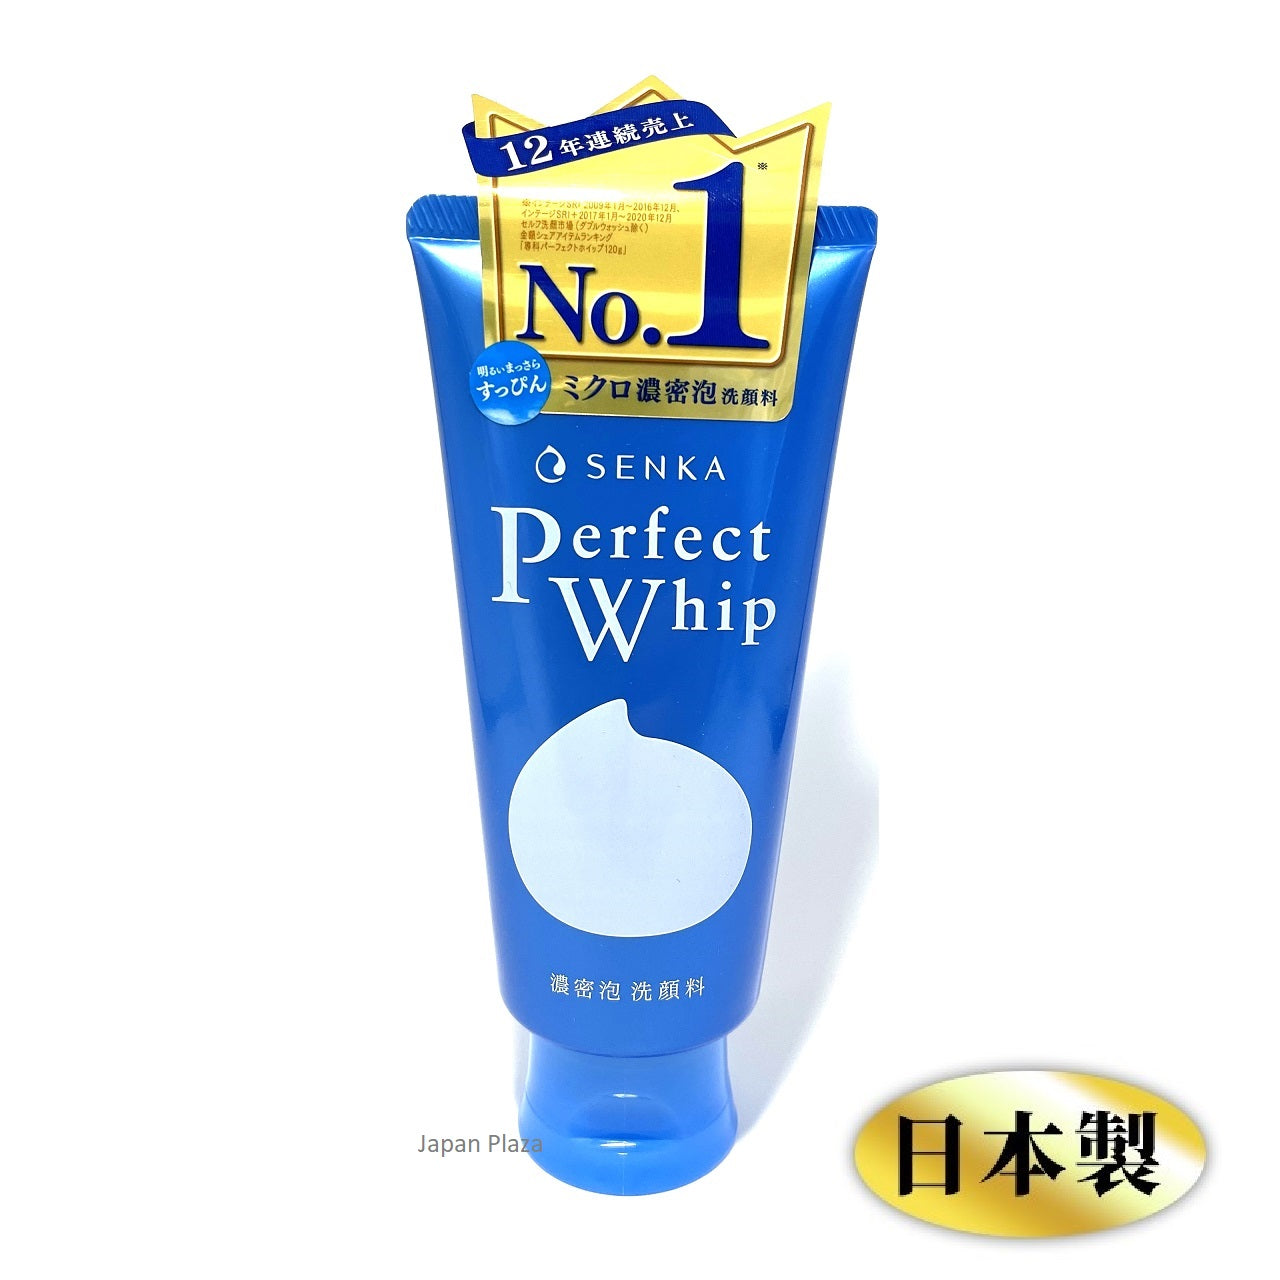 Shiseido Senka Perfect Whip Face Wash Cleansing Foam 120g (Made in Japan)